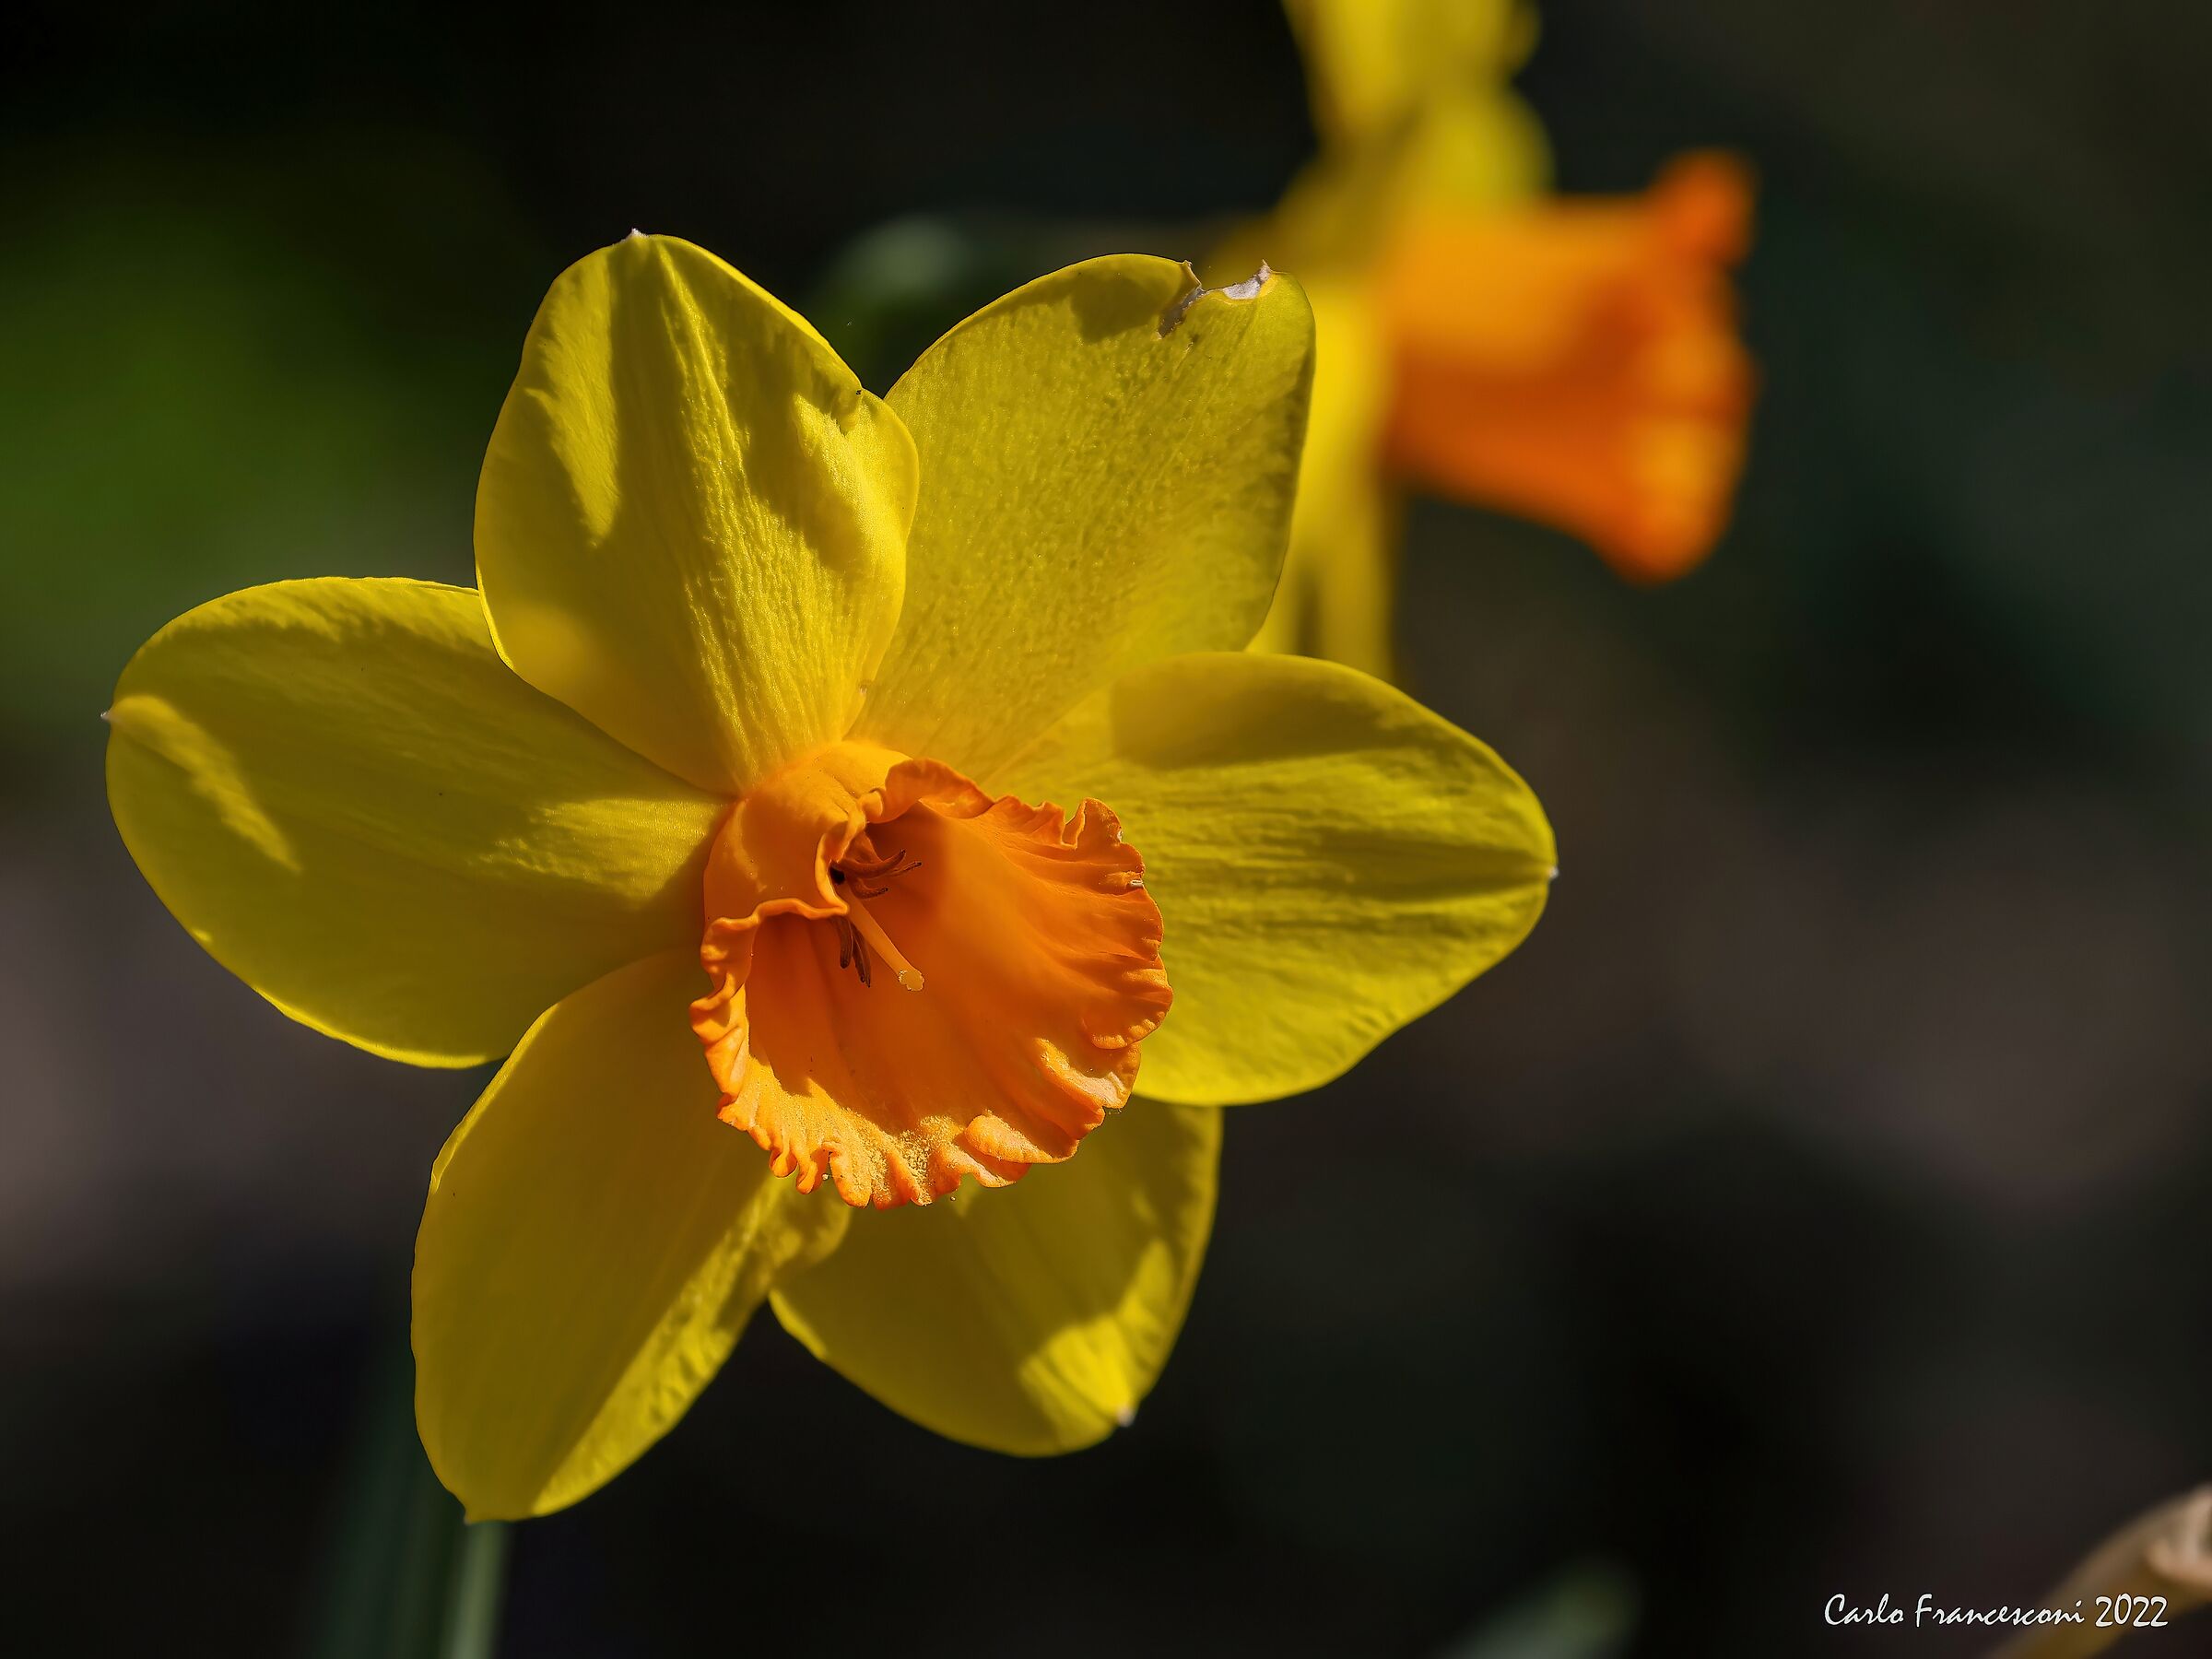 A Narcissus Trombone...